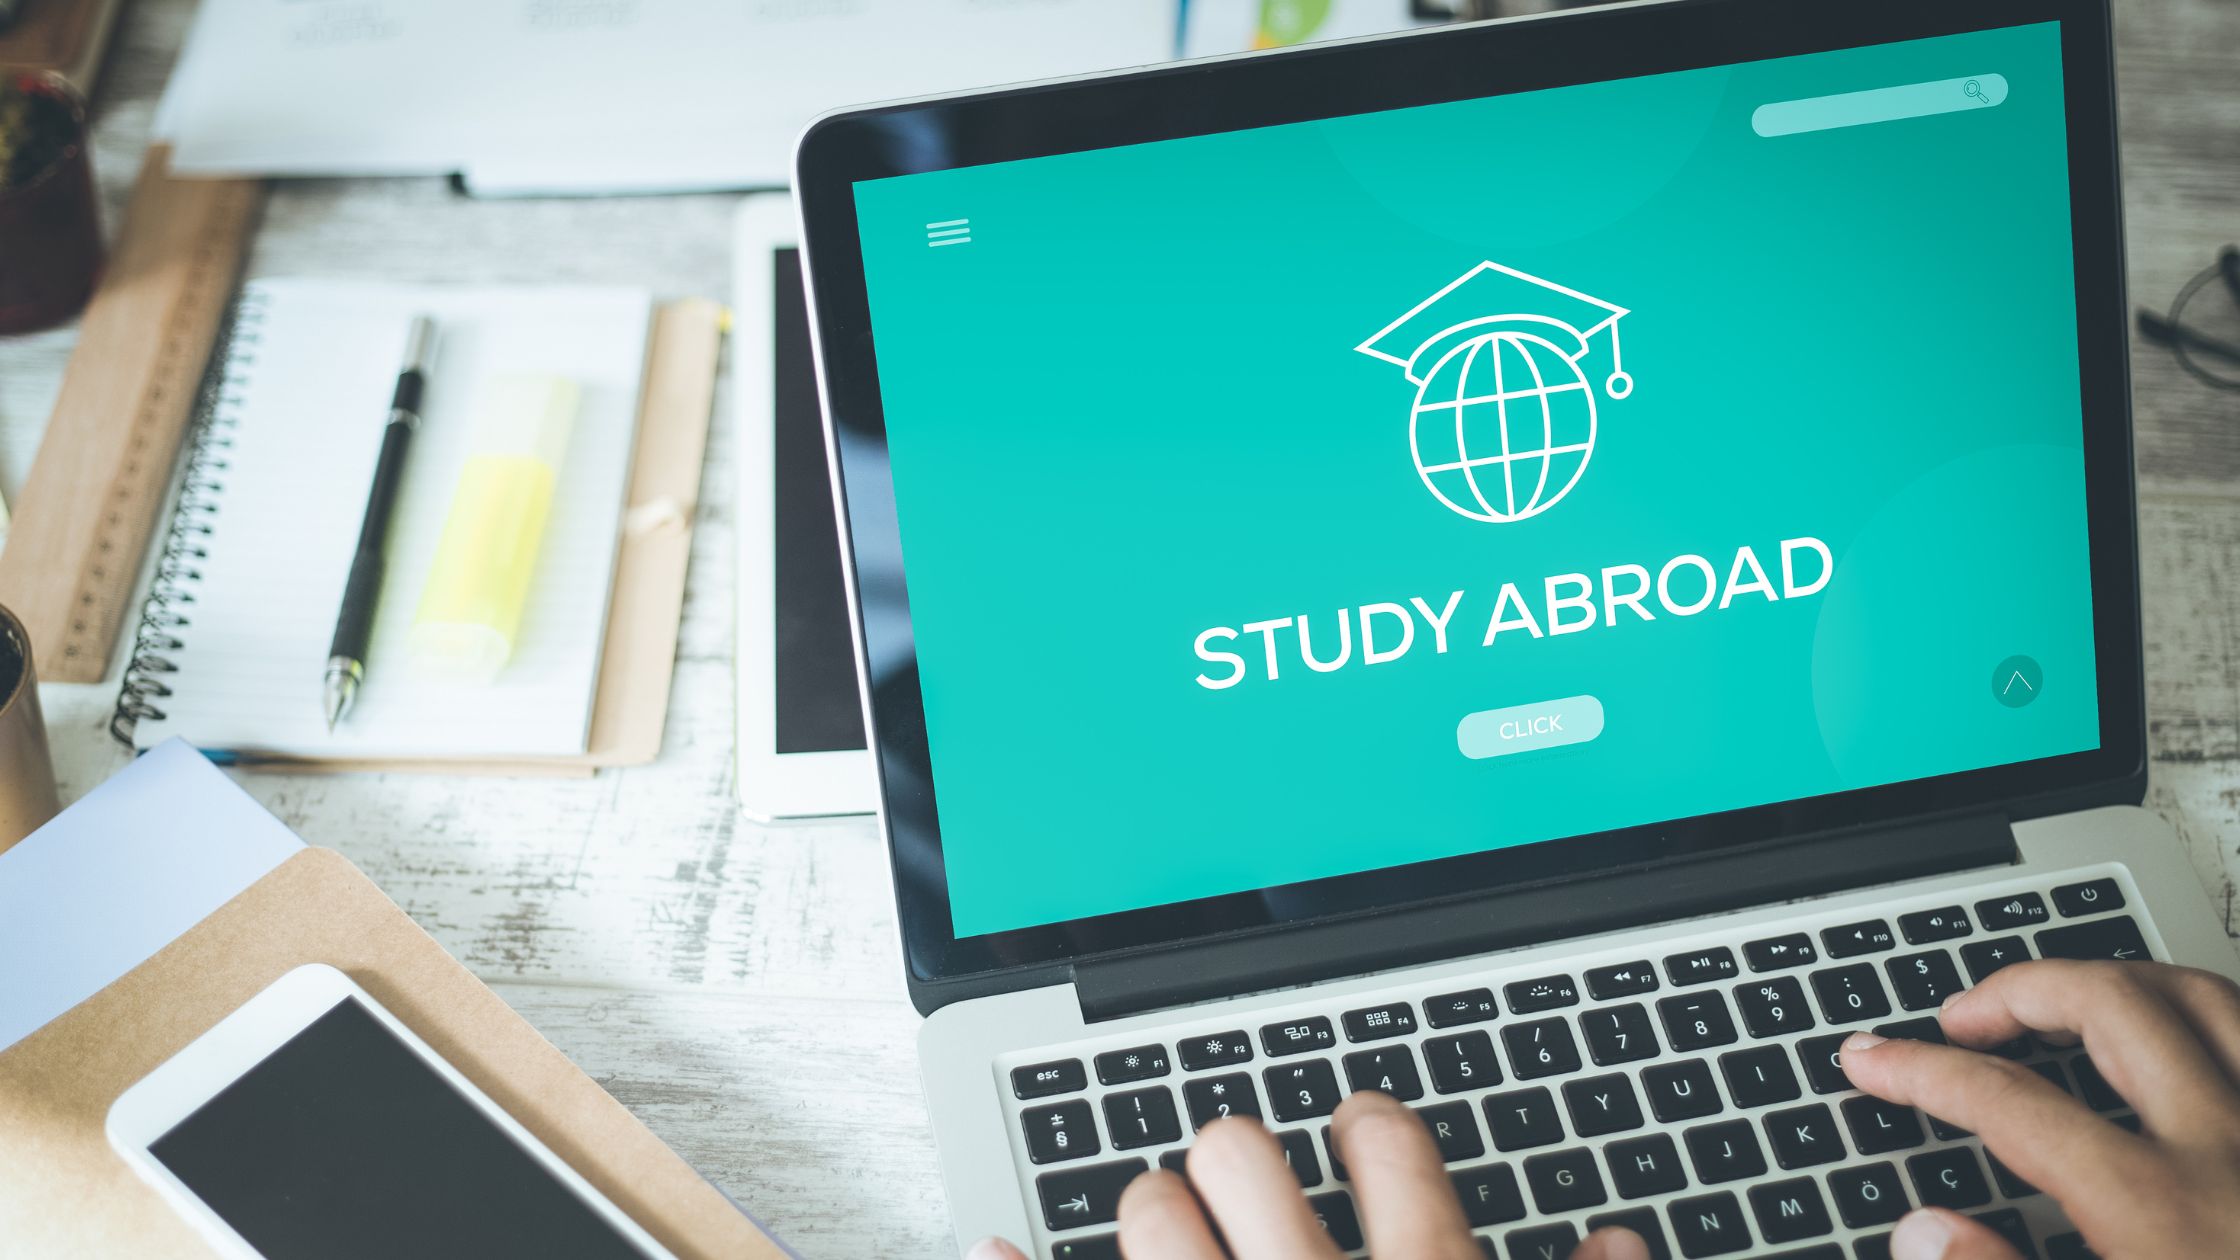 Study abroad laptop